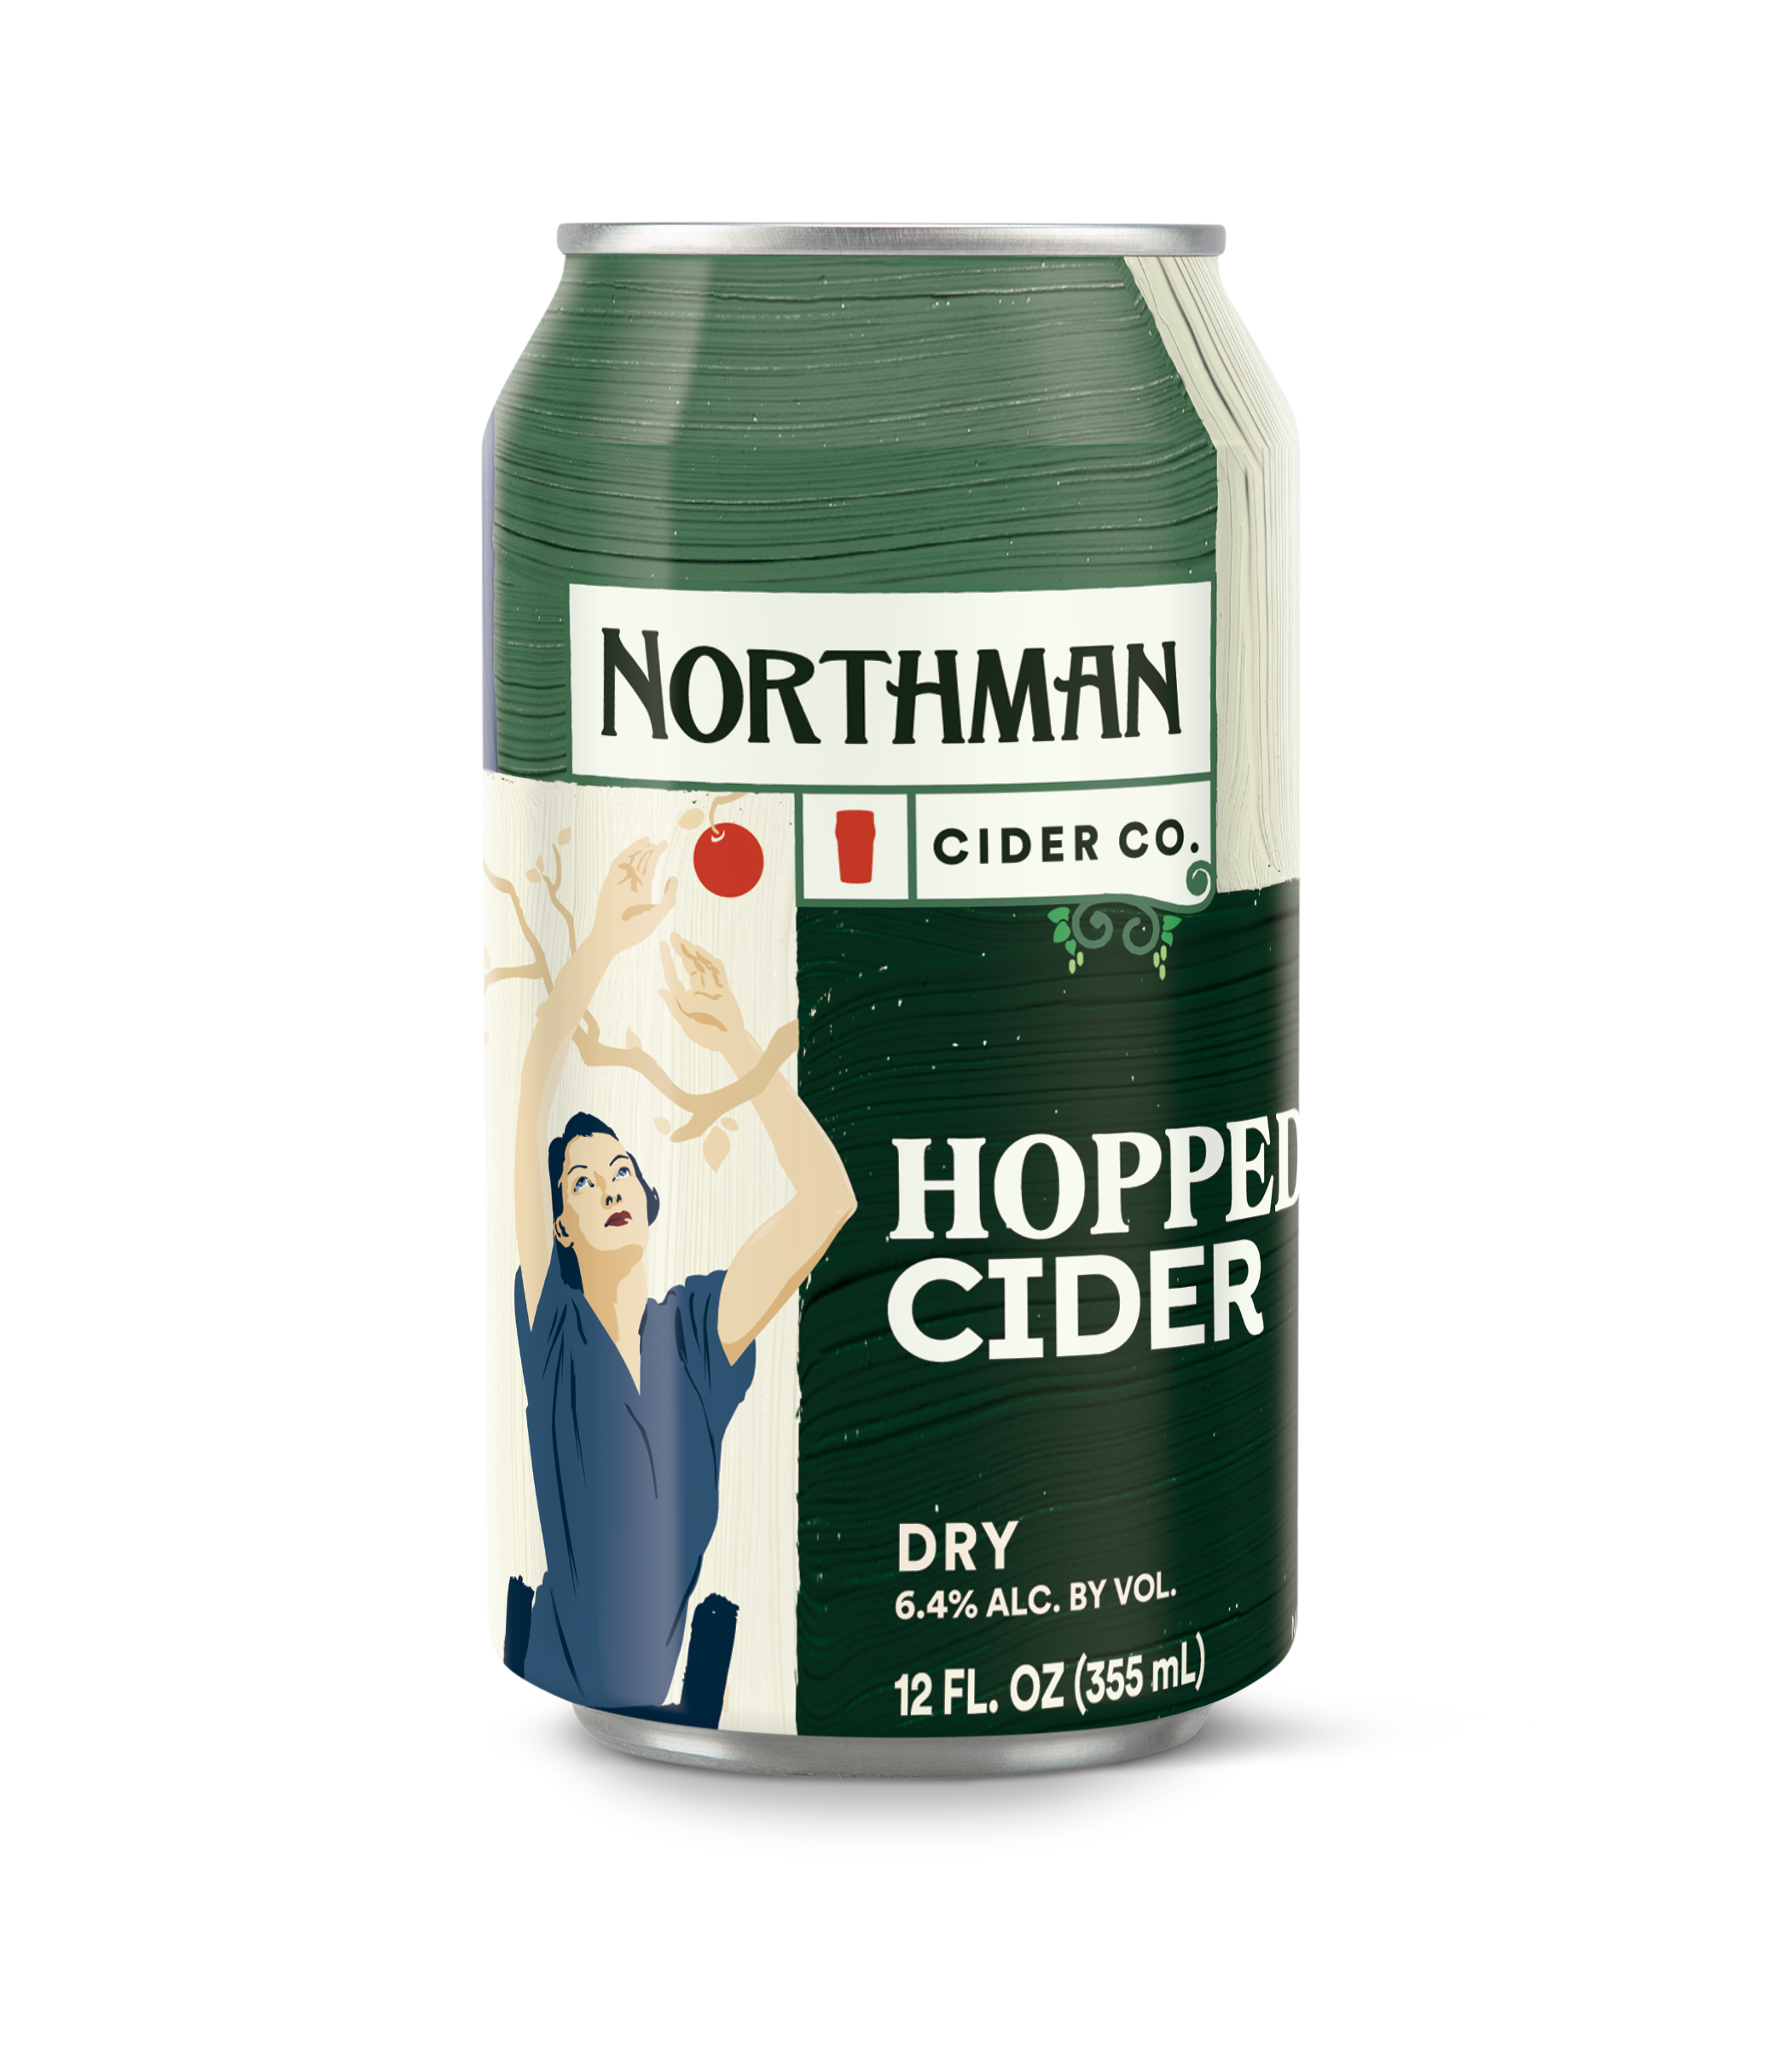 Northman Hopped Cider